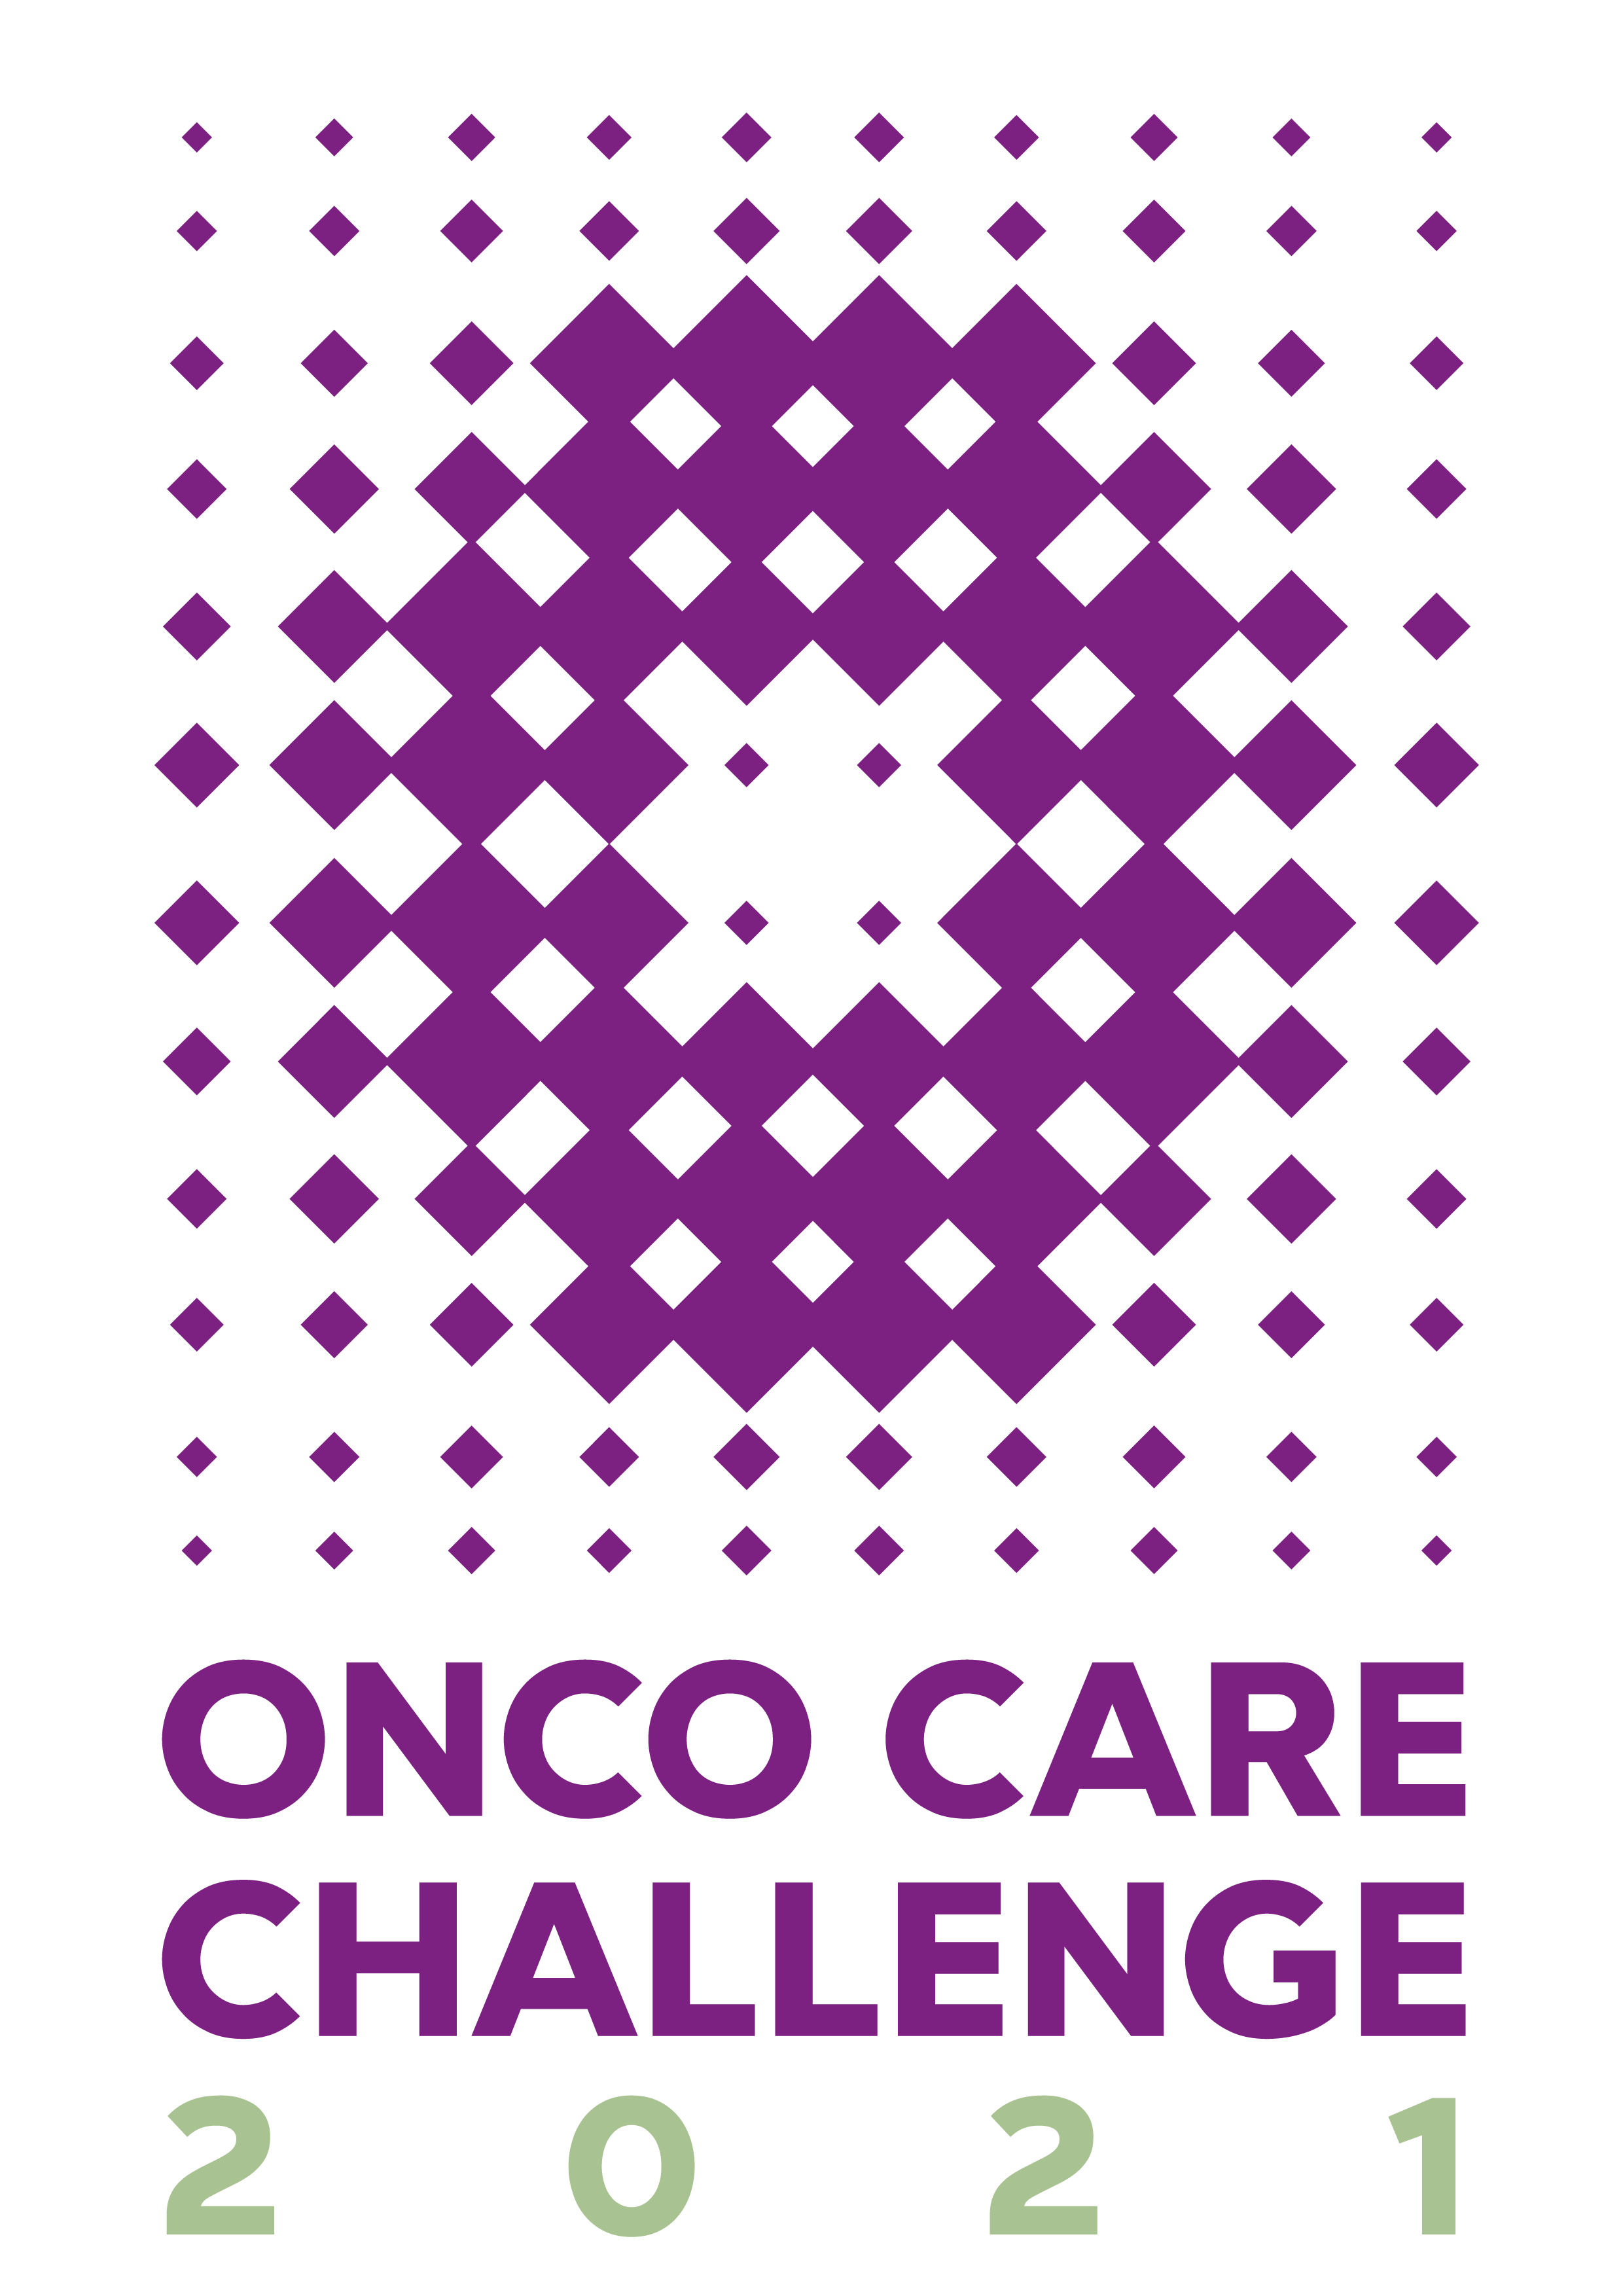 Onco care challenge logo